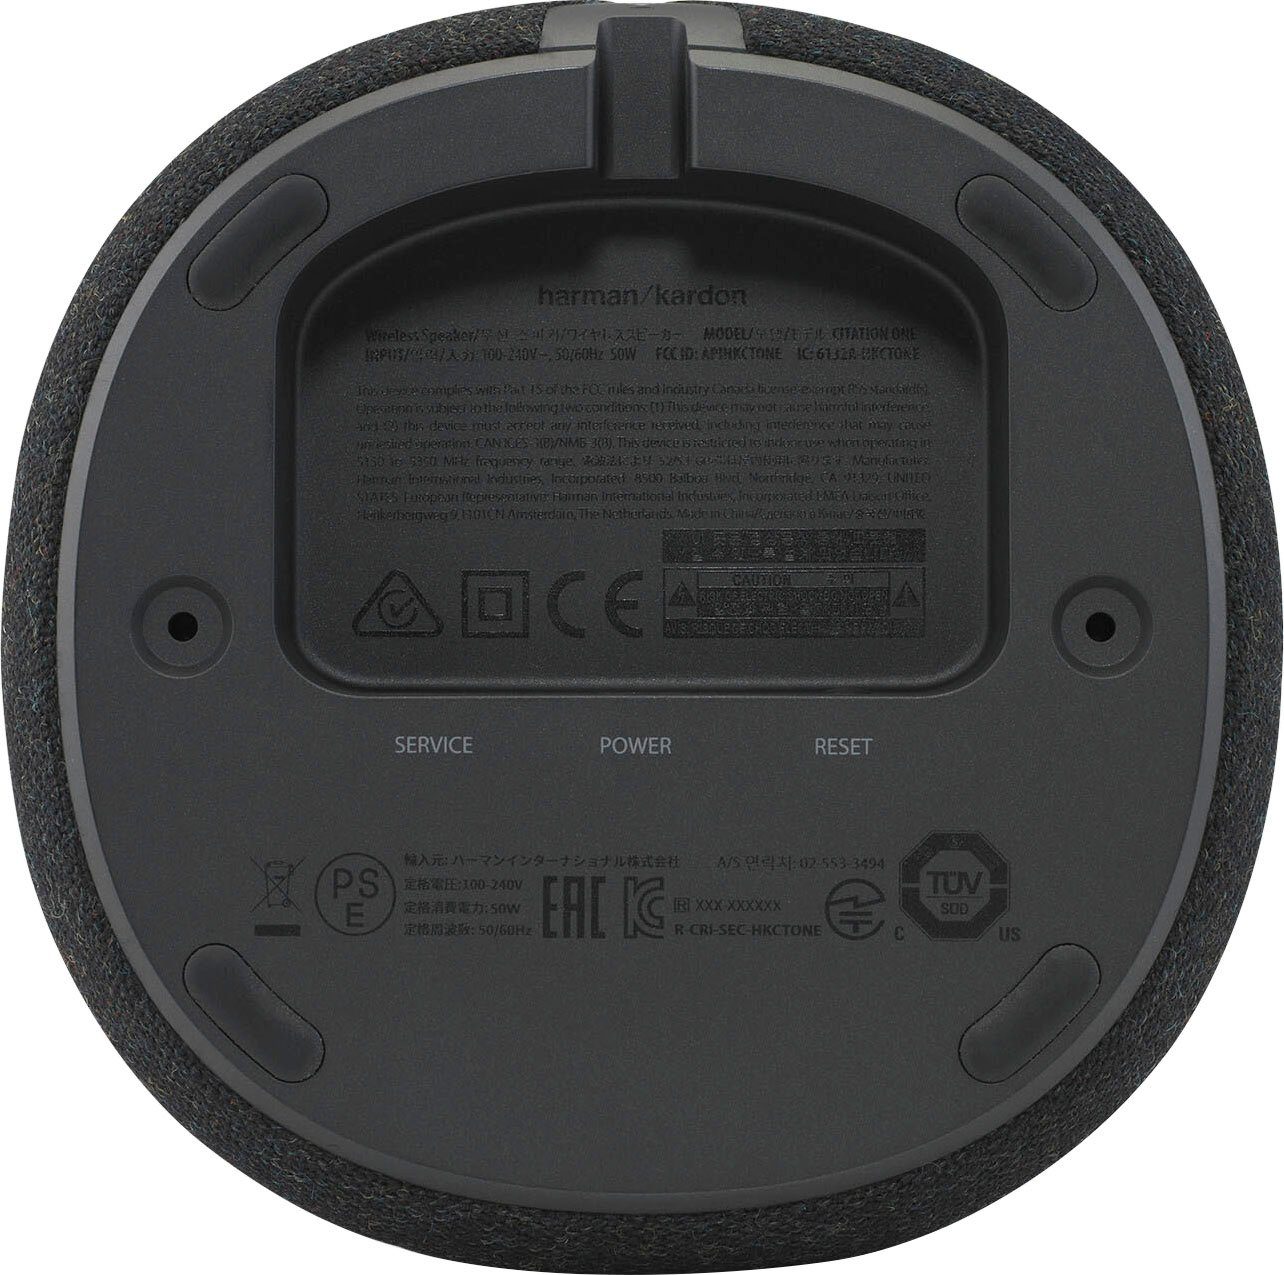 Stereo 40 Citation Bluetooth-Lautsprecher ONE 2 W, schwarz Harman/Kardon WLAN, MKIII Stück) (Bluetooth, DUO